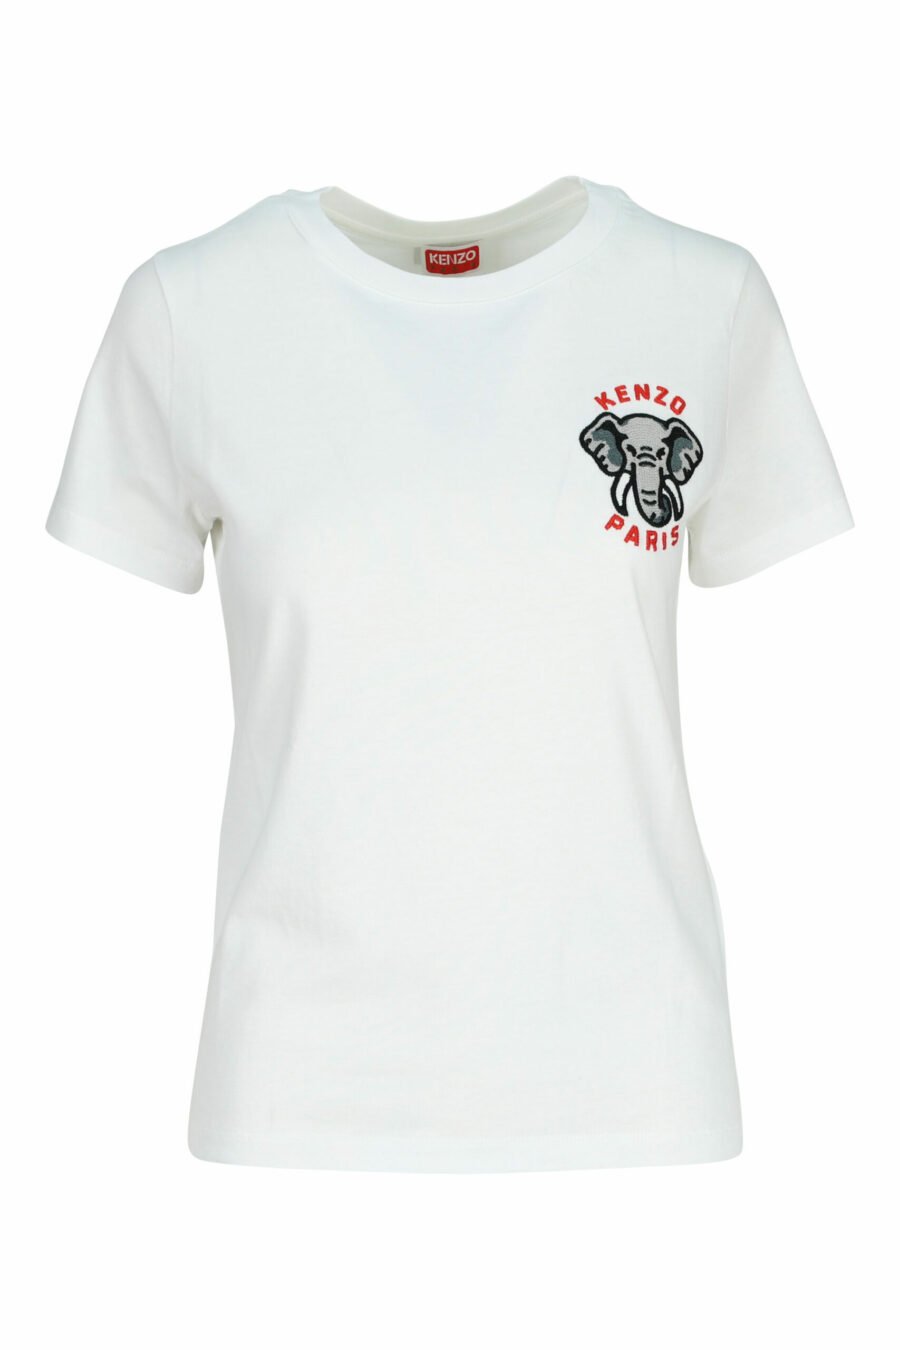 Camiseta blanca con minilogo "kenzo elephant" - 3612230620117 scaled